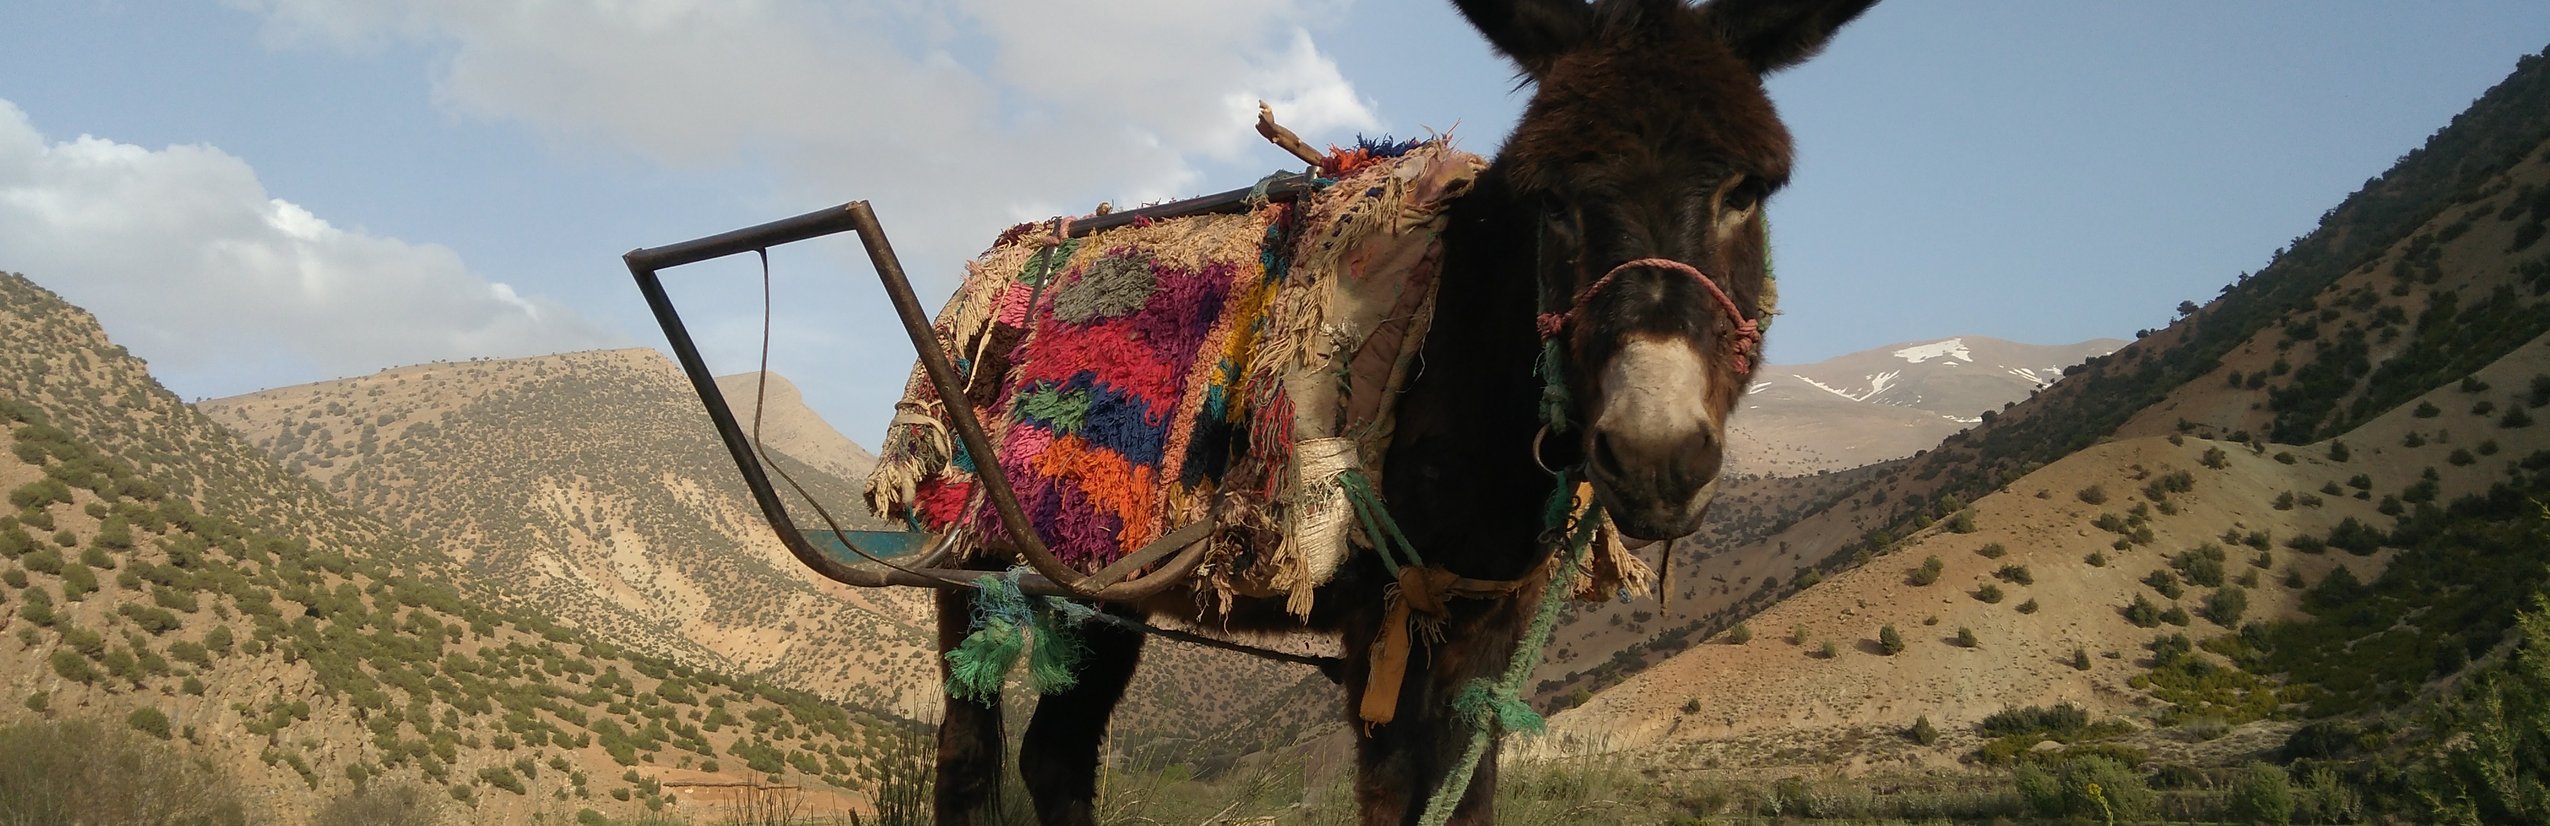 Marokko mit Kindern - Reisebericht Marokko mit Kindern - Esel mit Sattel